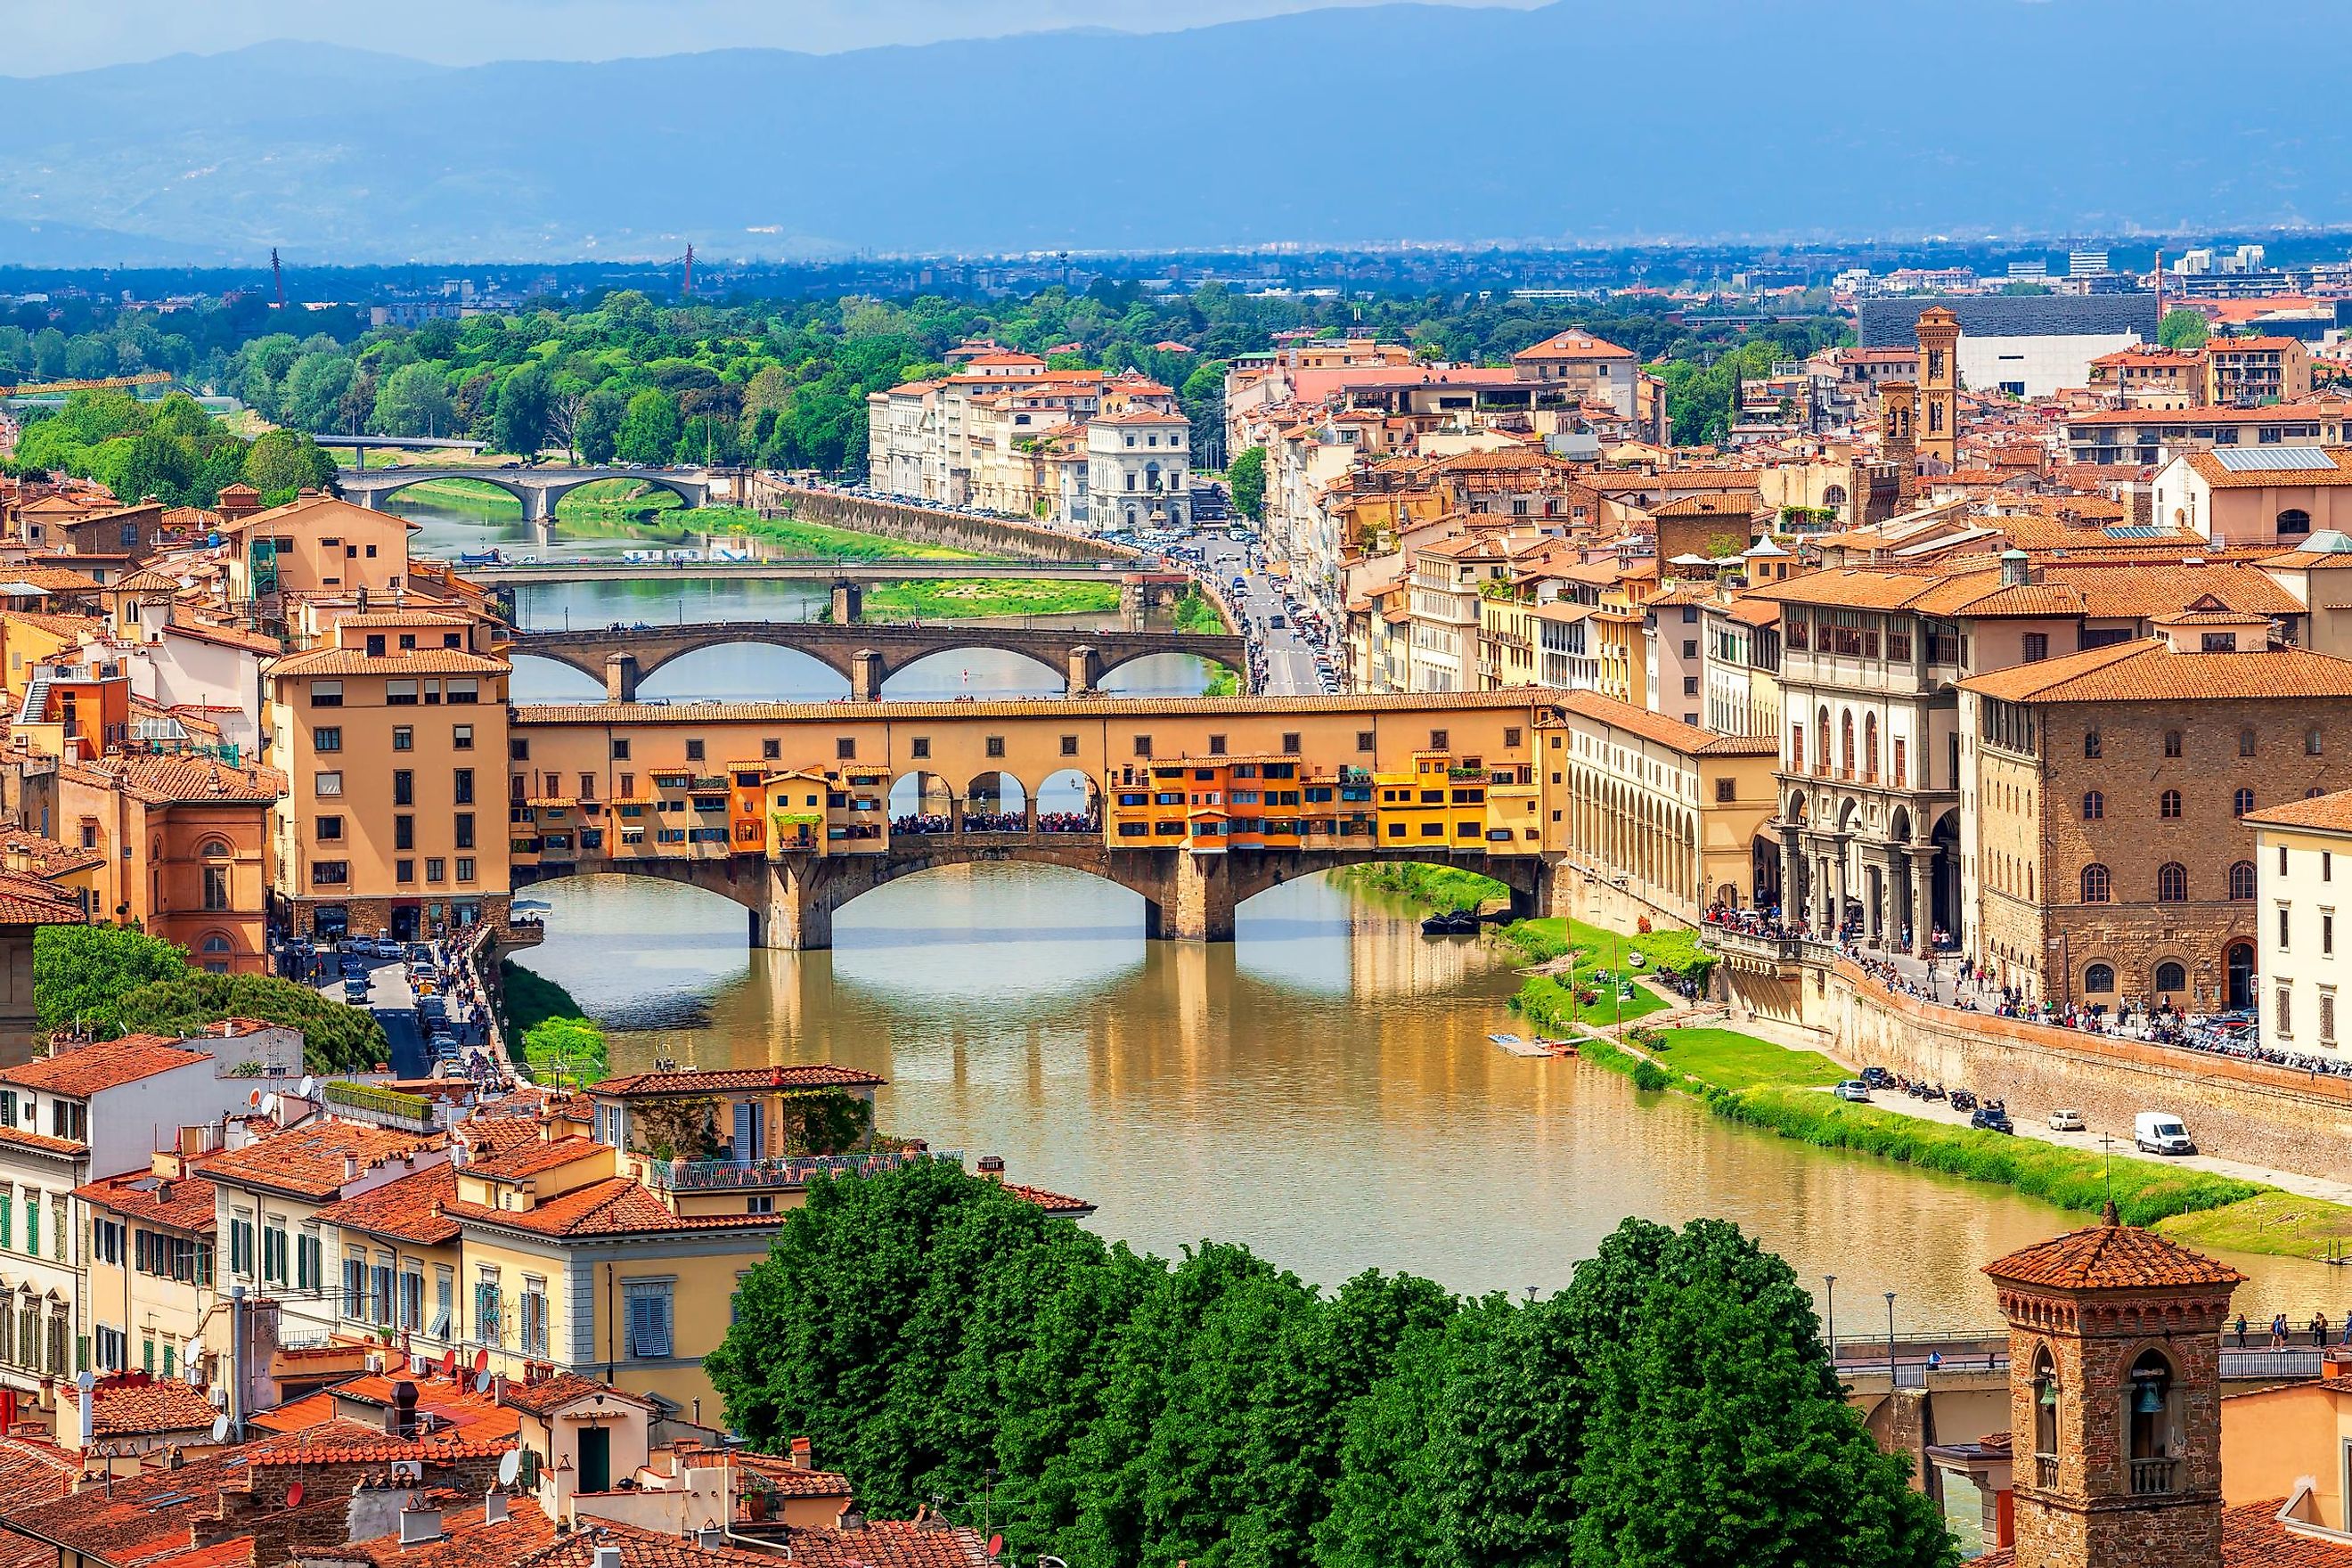 Panoramic view of medieval stone bridge Ponte Vecchio over the Arno River.